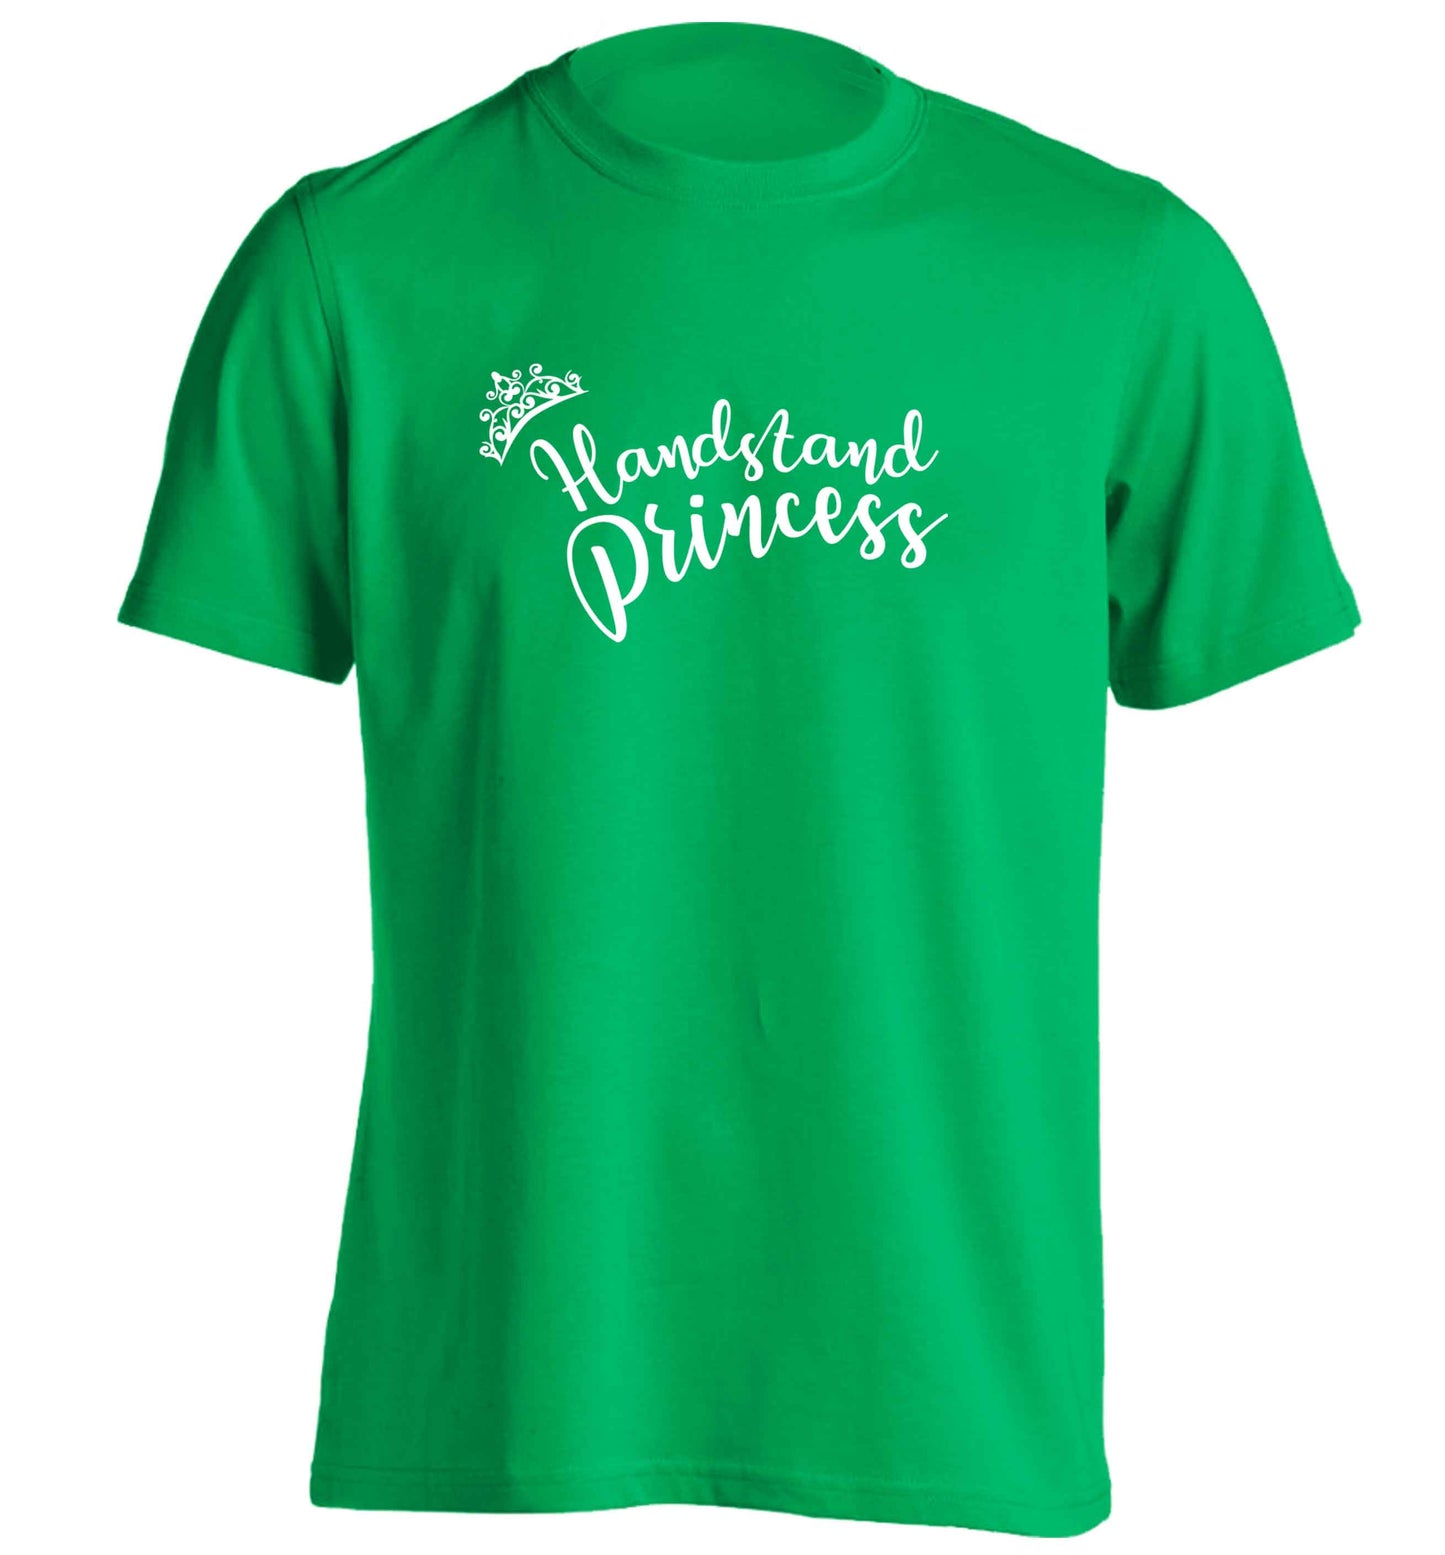 Handstand princess adults unisex green Tshirt 2XL